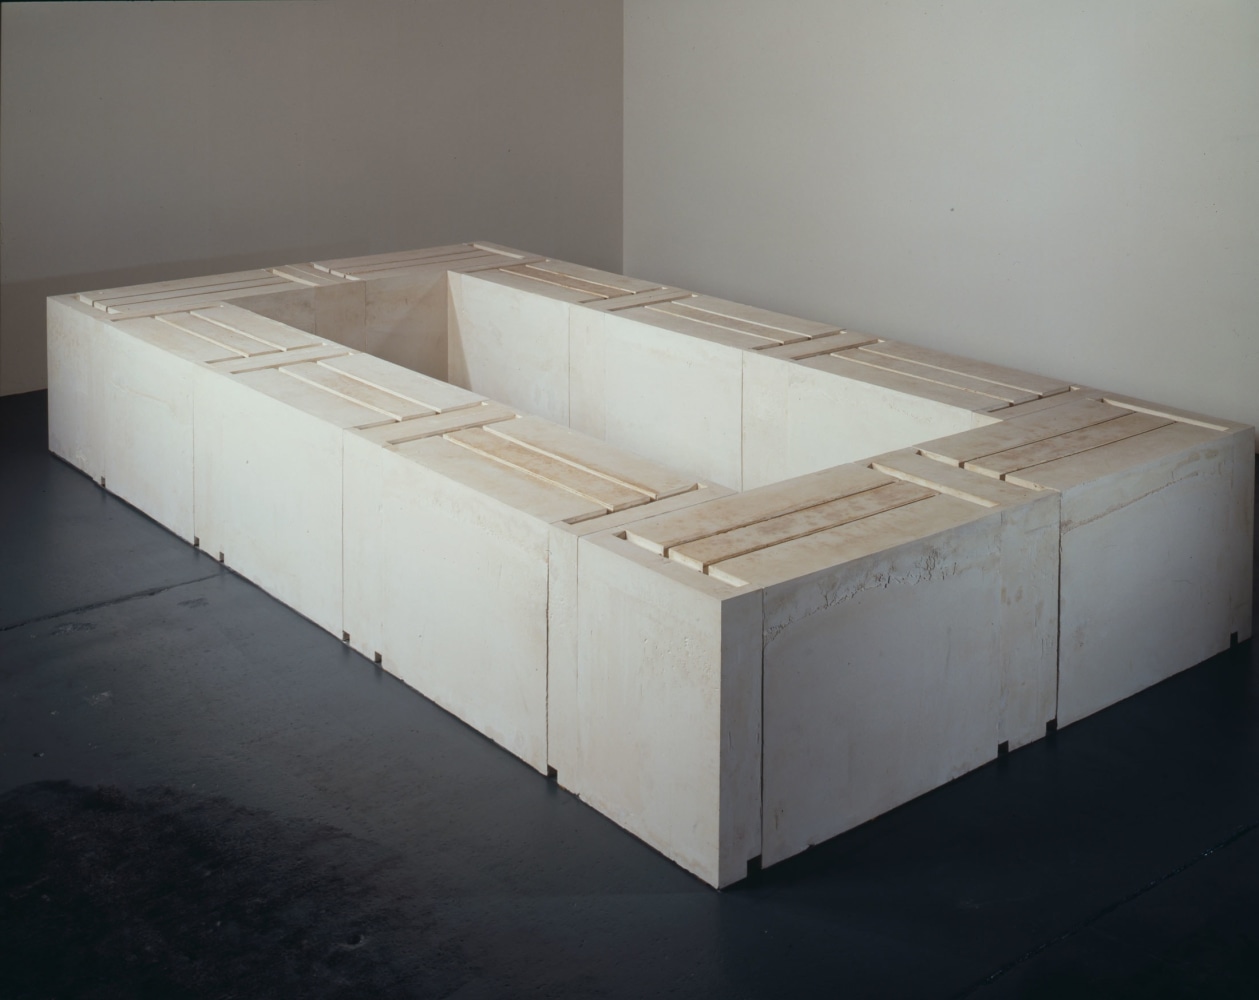 Rachel Whiteread
Untitled (Ten Tables), 1996
Plaster
28 1/2 x 94 1/4 x 188 1/4 inches
(72.4 x 239.4 x 478.2 cm)